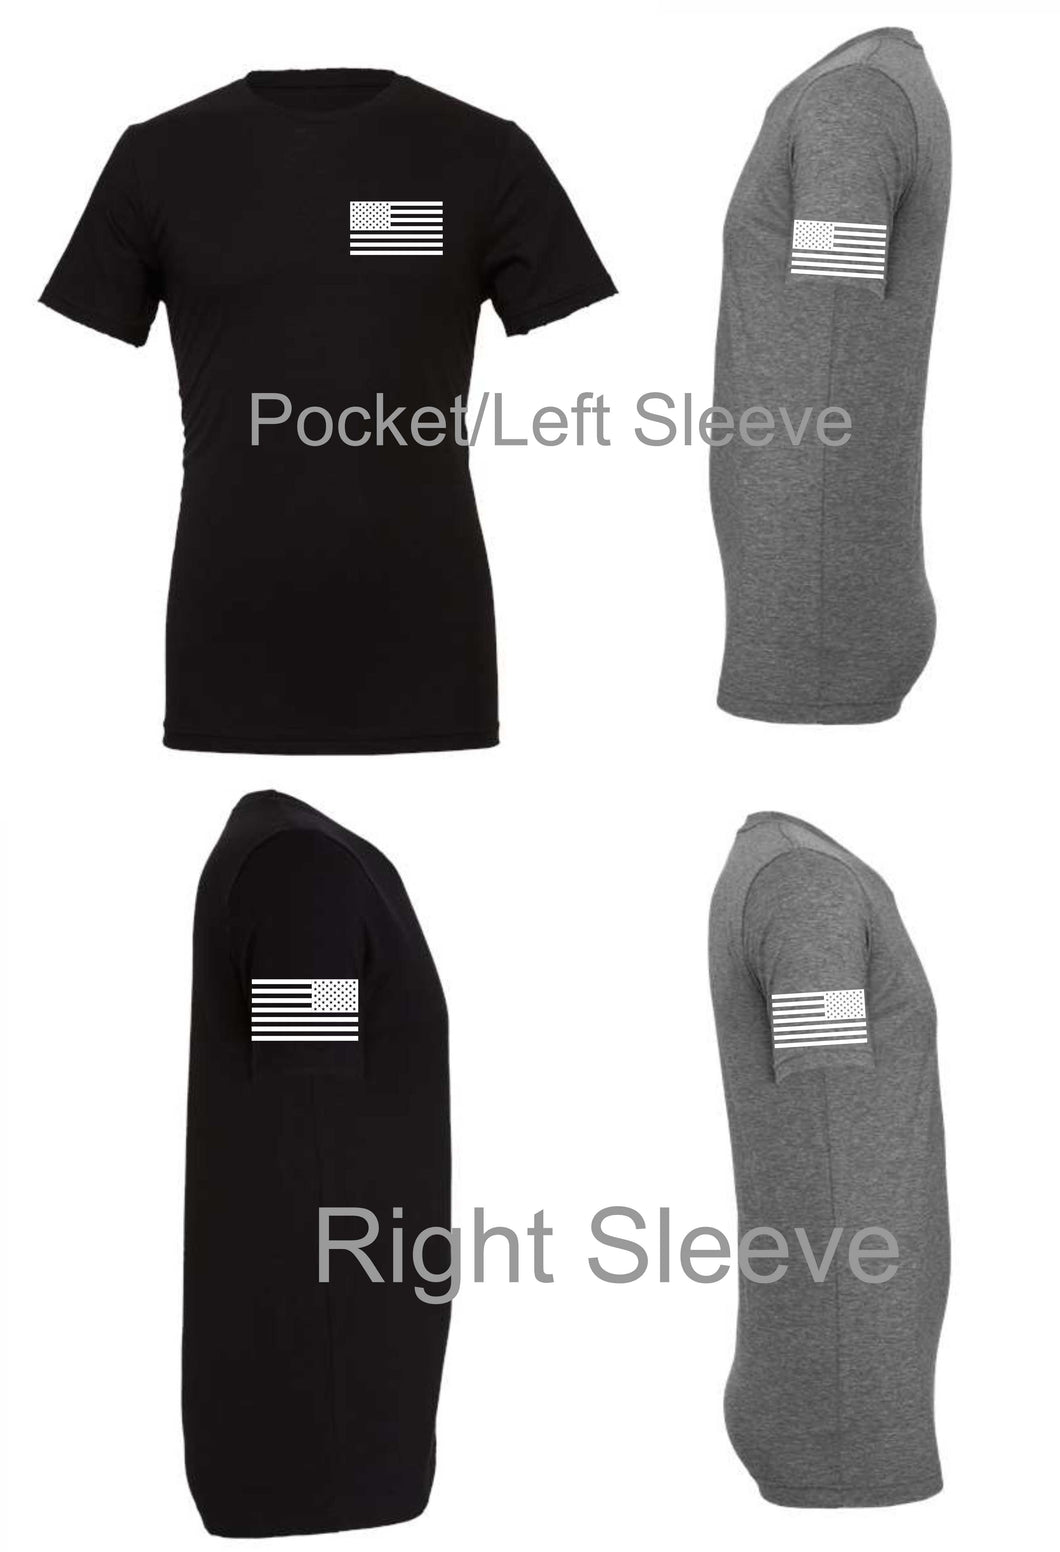 PP0013 Flag Pocket/Sleeve